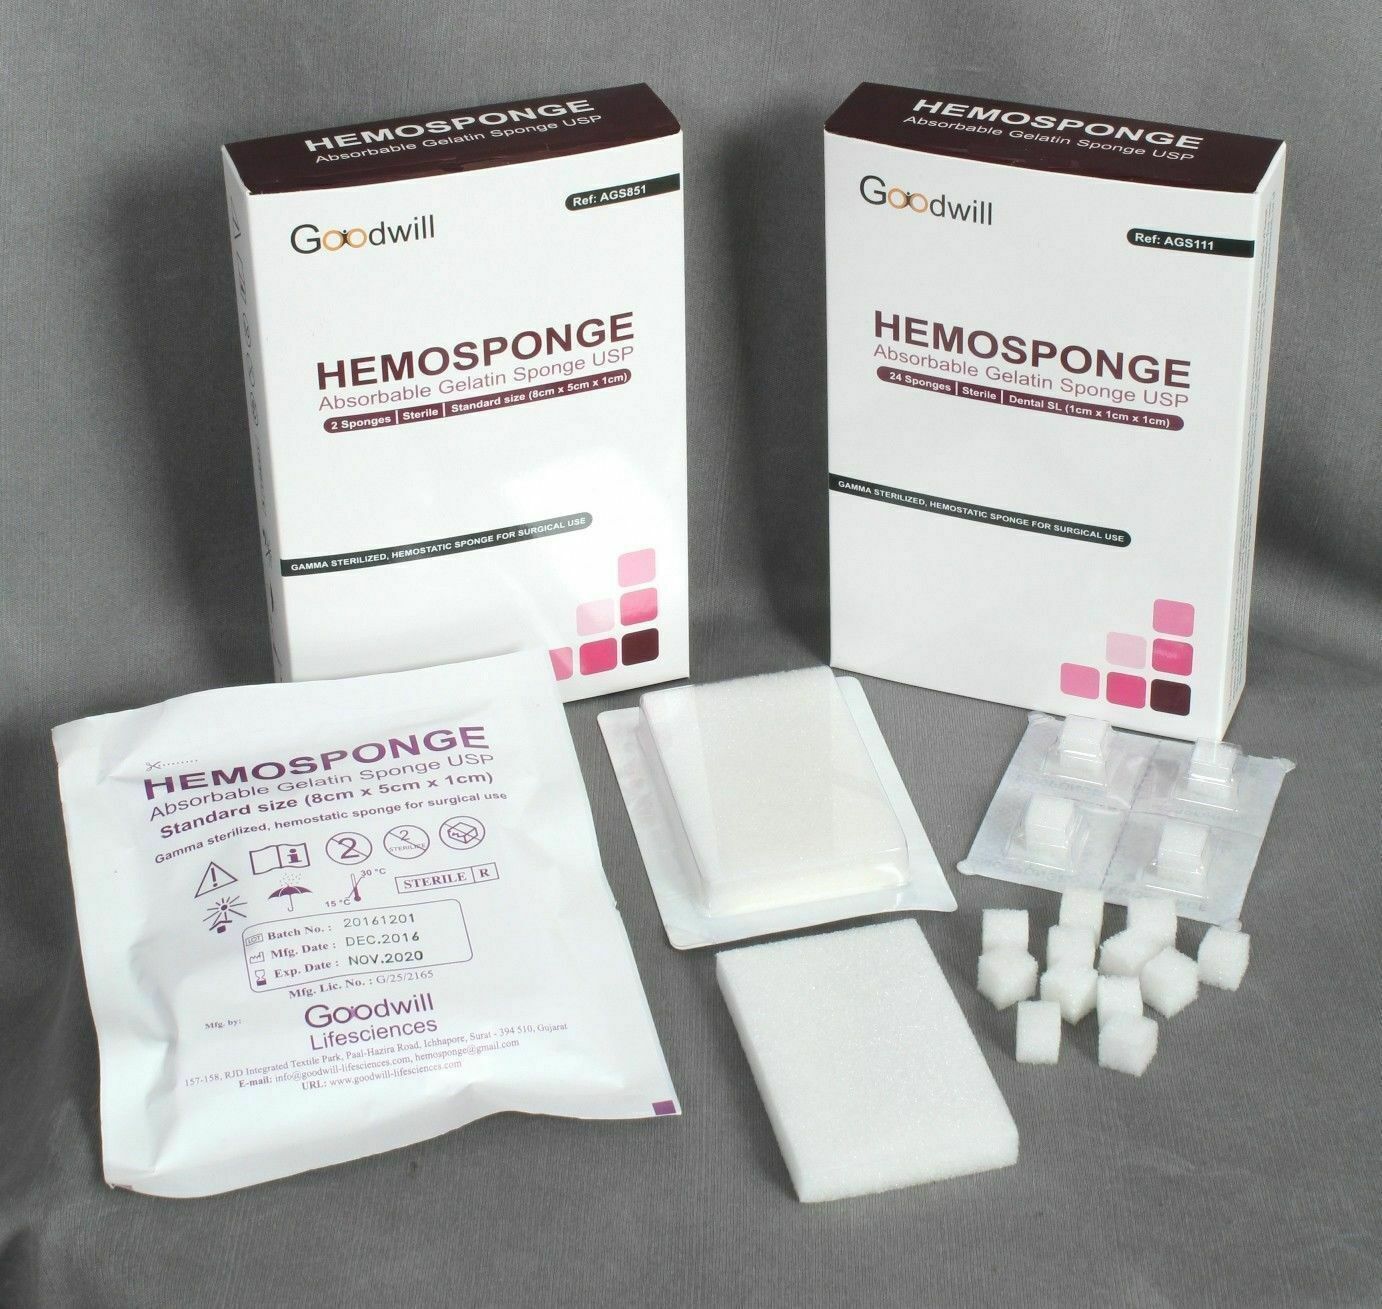 10X DENTAL HEMOSPONGE ABSORBABLE GELATIN SPONGE USP STERILE 32 SPONGE10x10x10mm